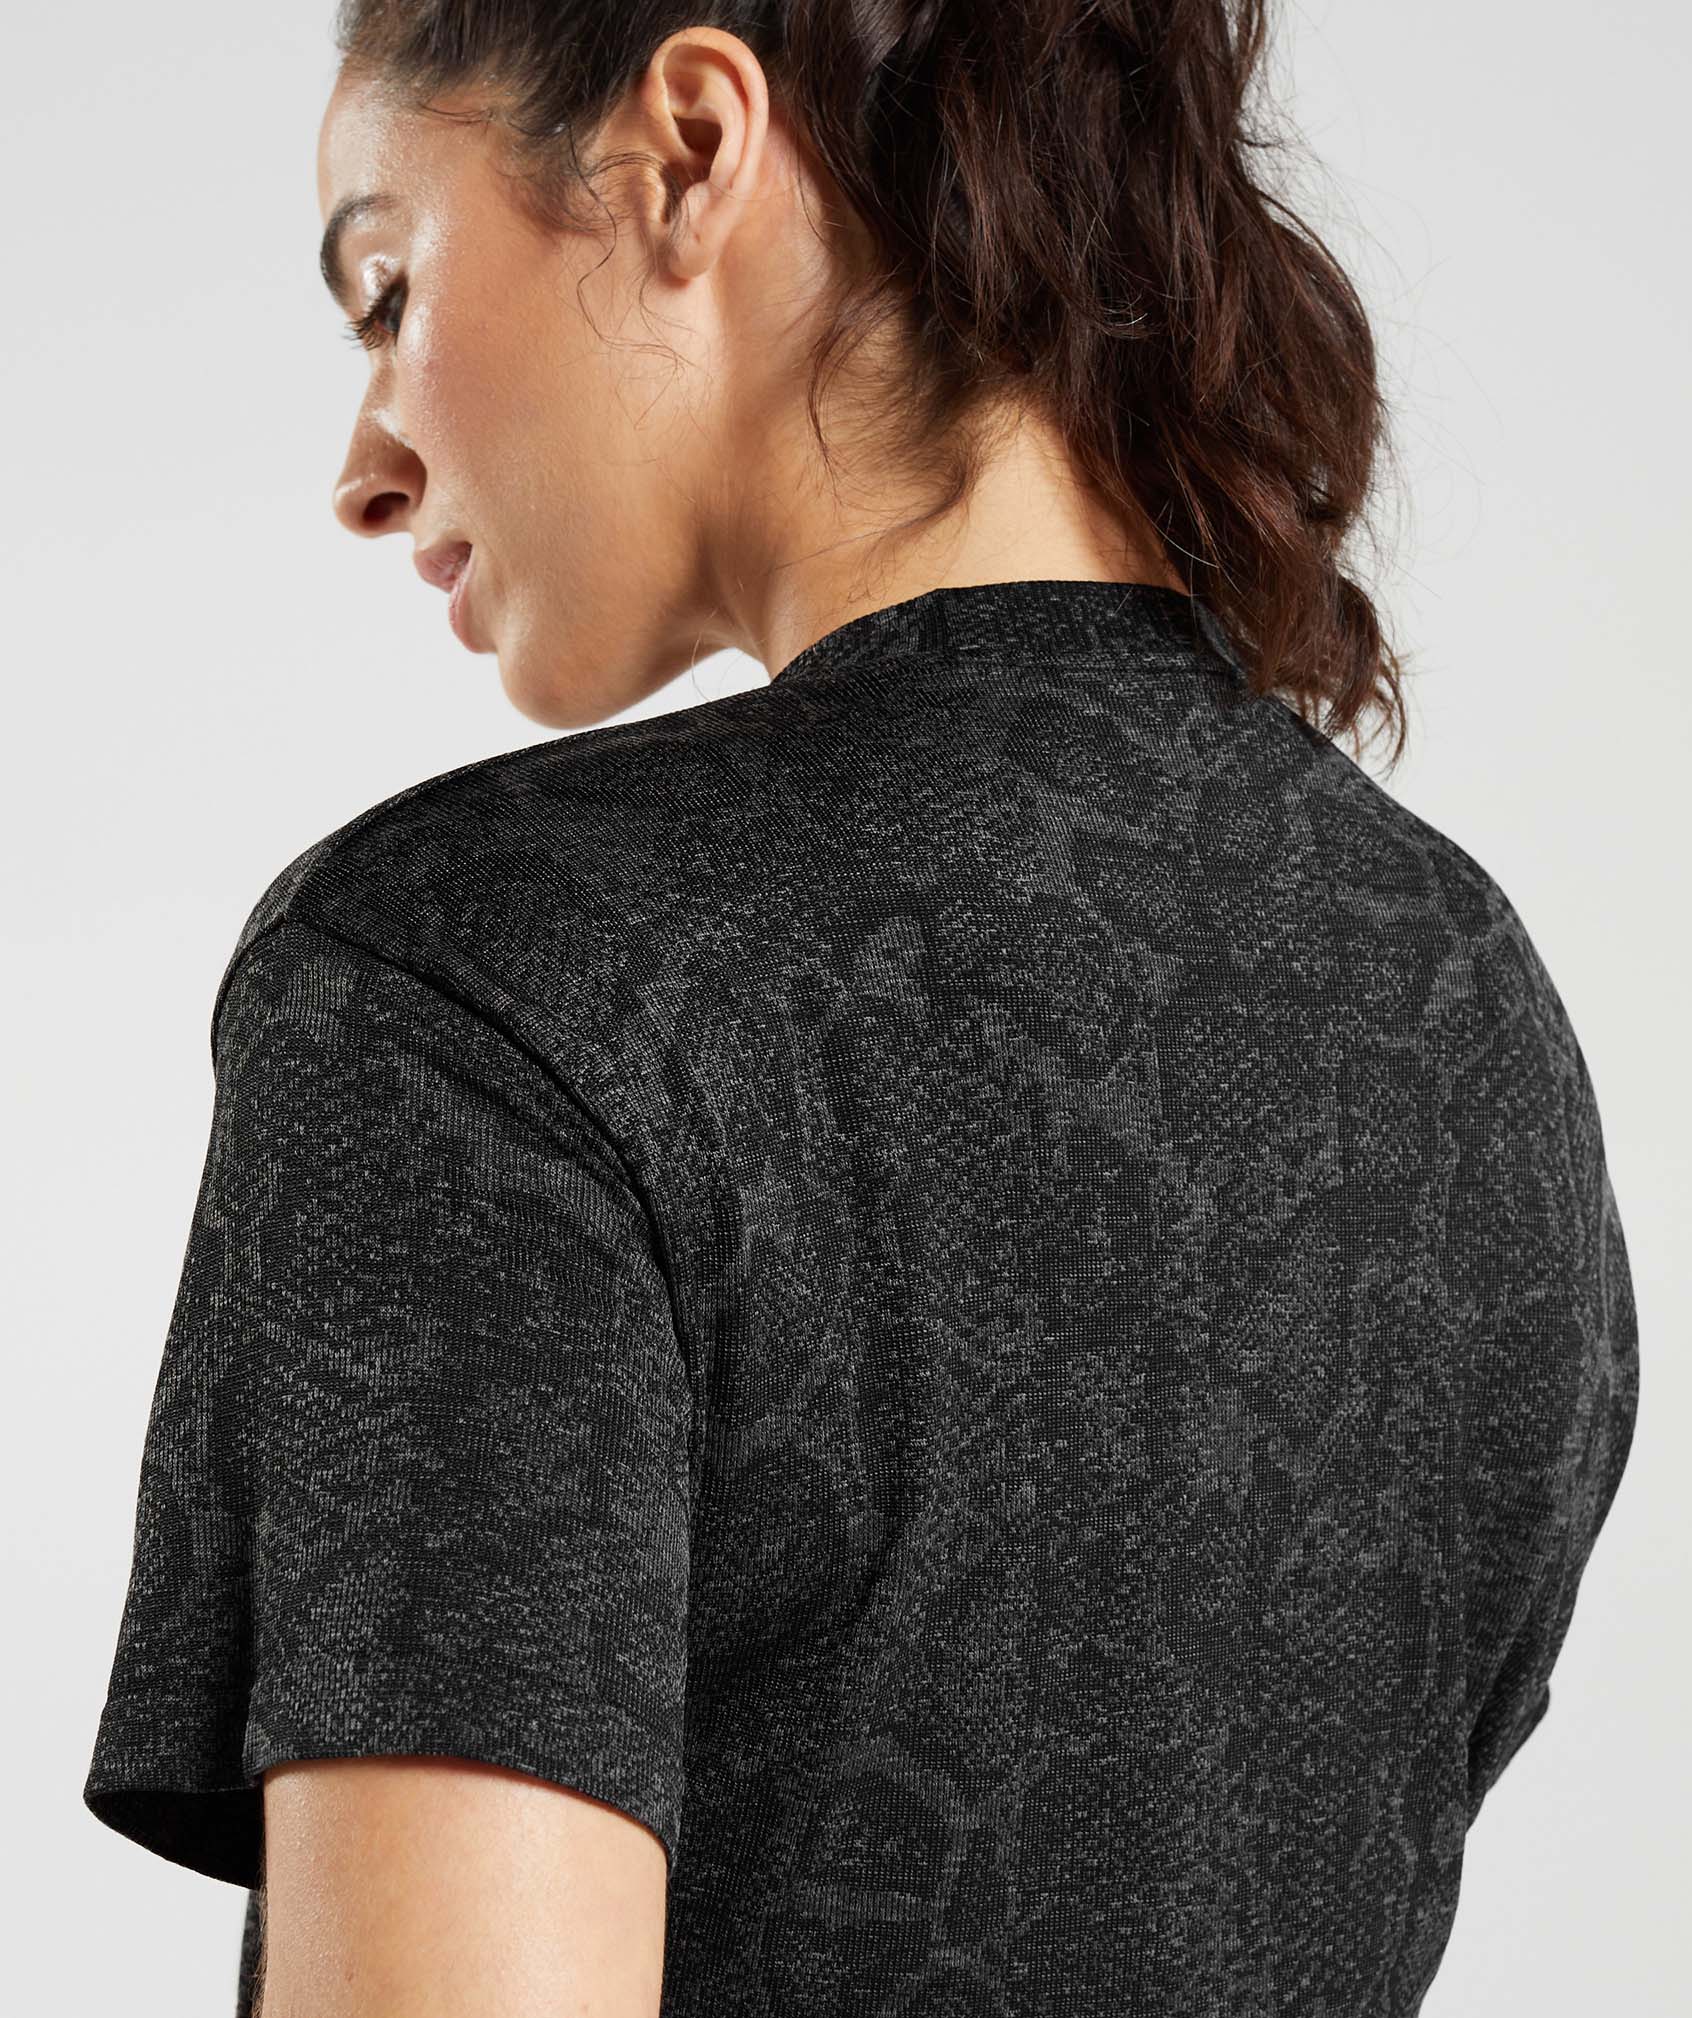 Adapt Animal Seamless T-Shirt in Urban Grey/Black